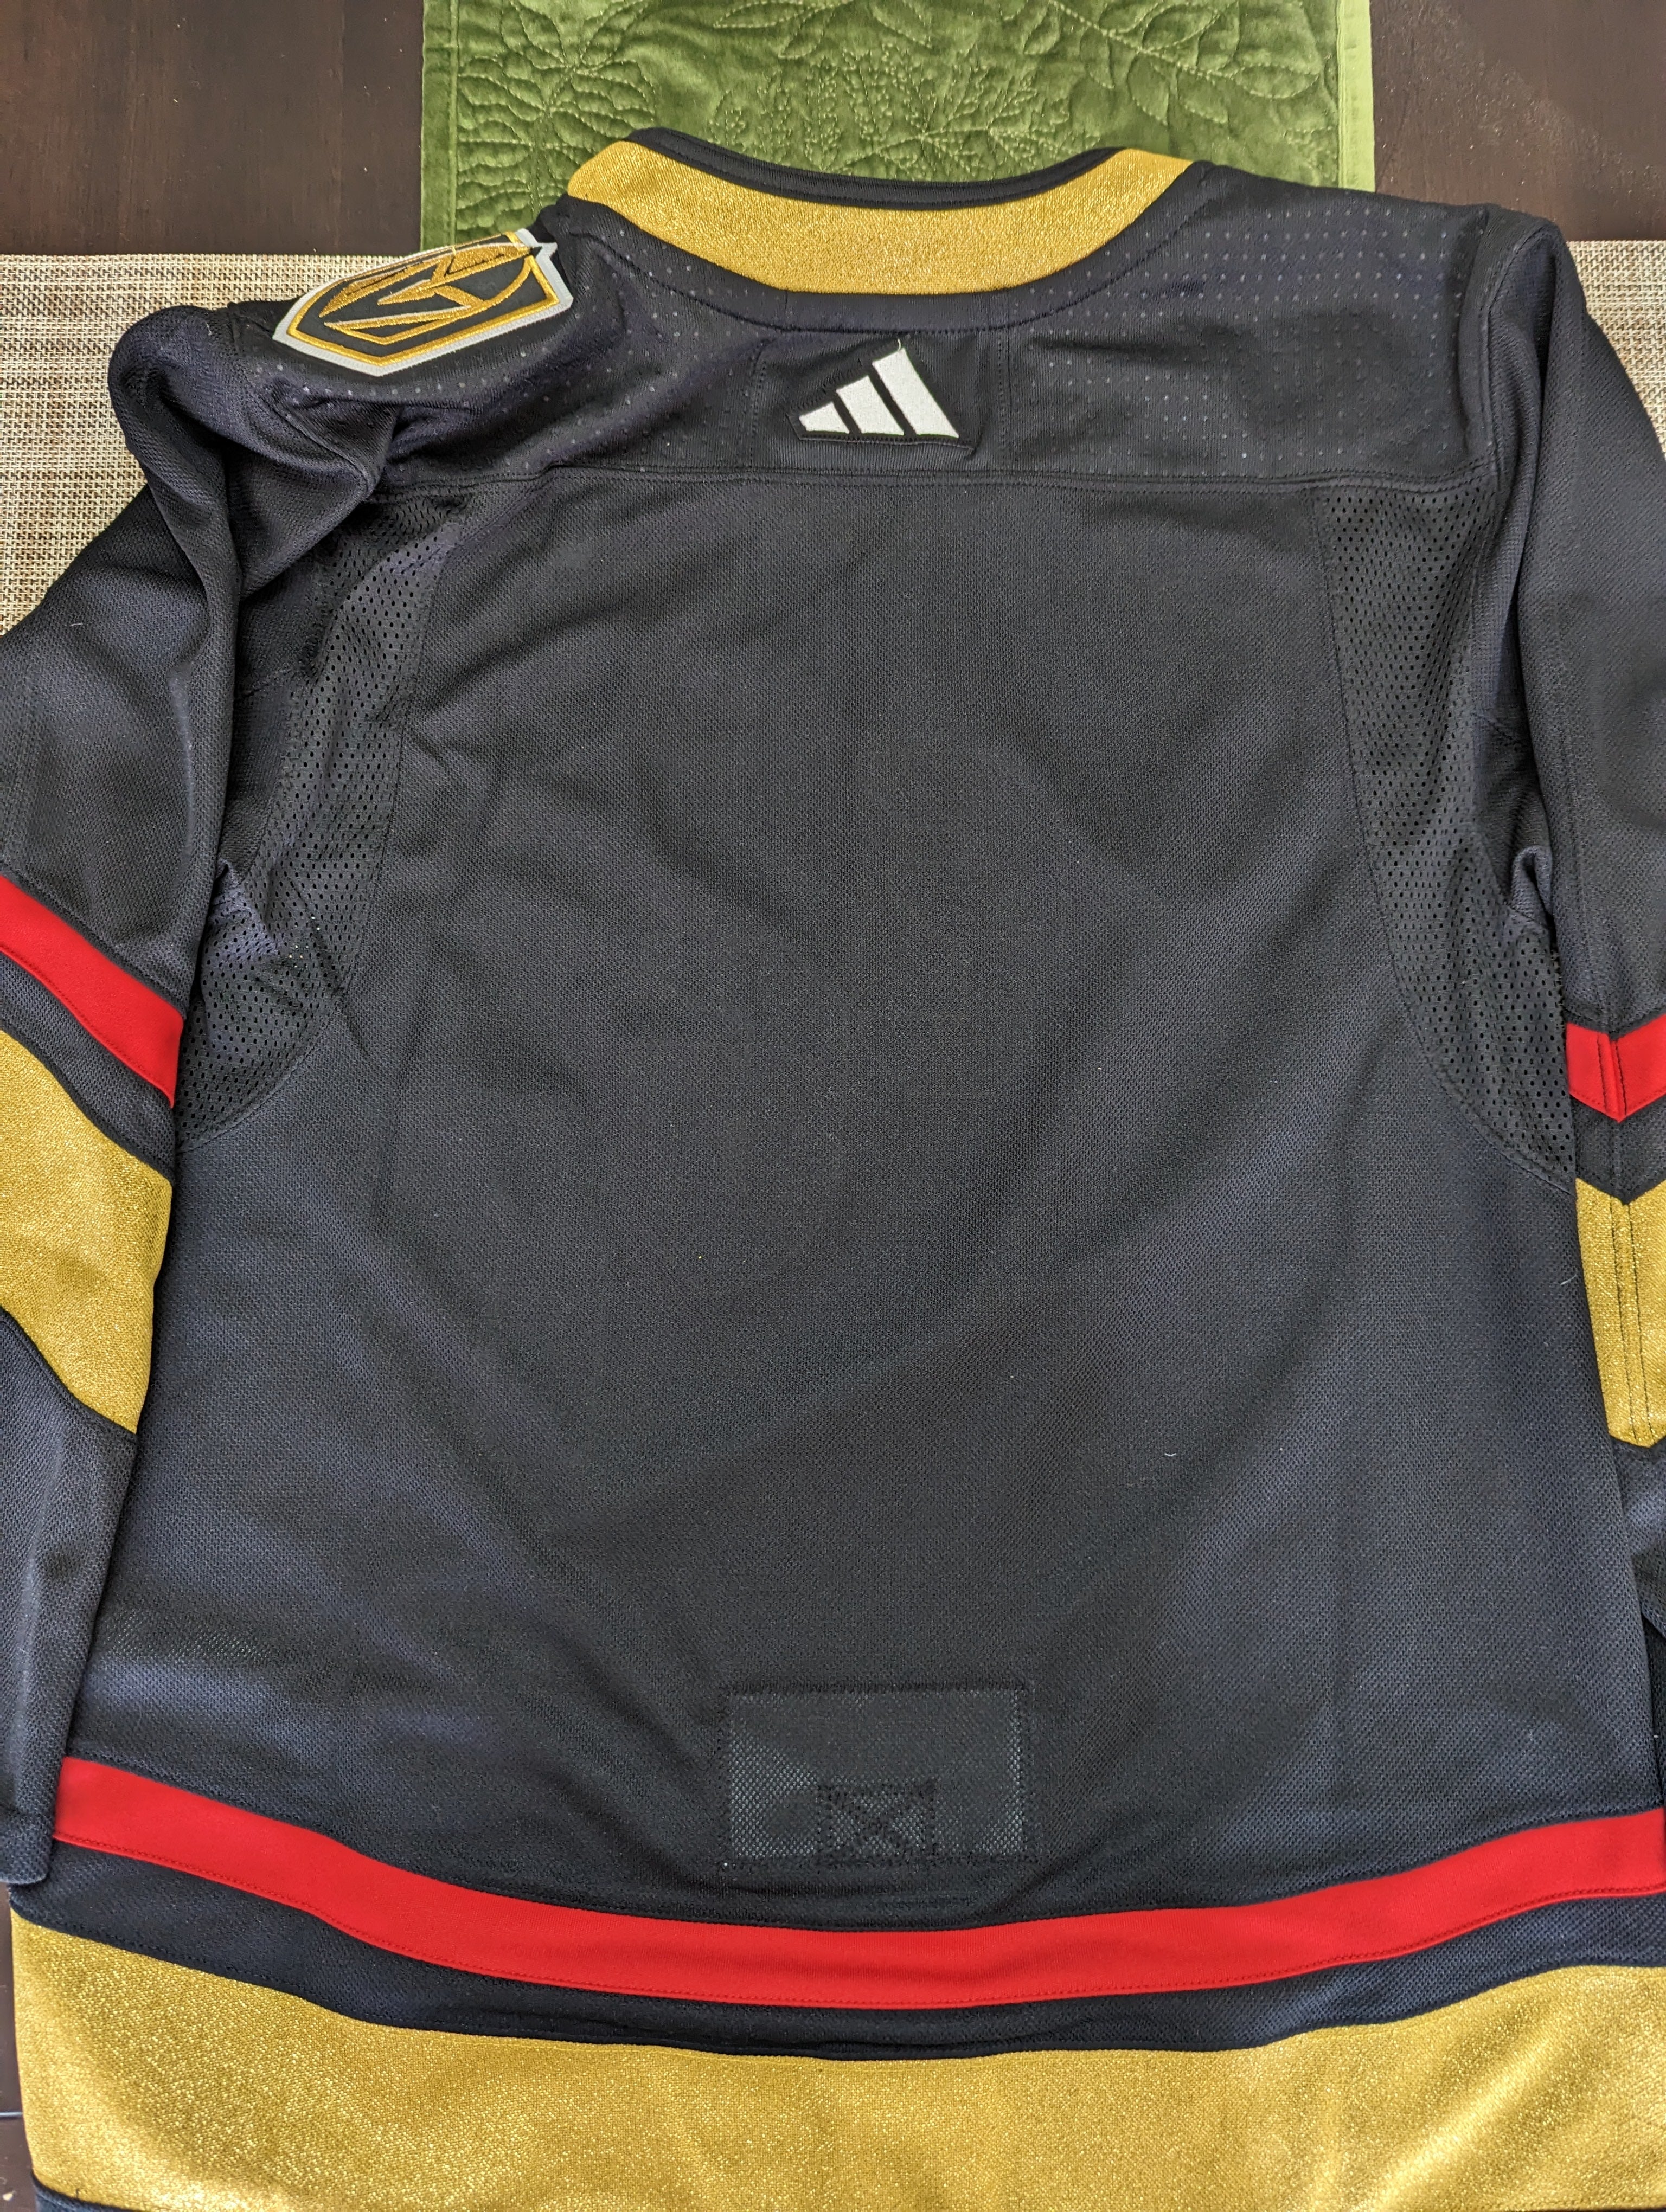 Adidas Reverse Retro Vegas Golden Knights Jersey - Size 56 (XXL